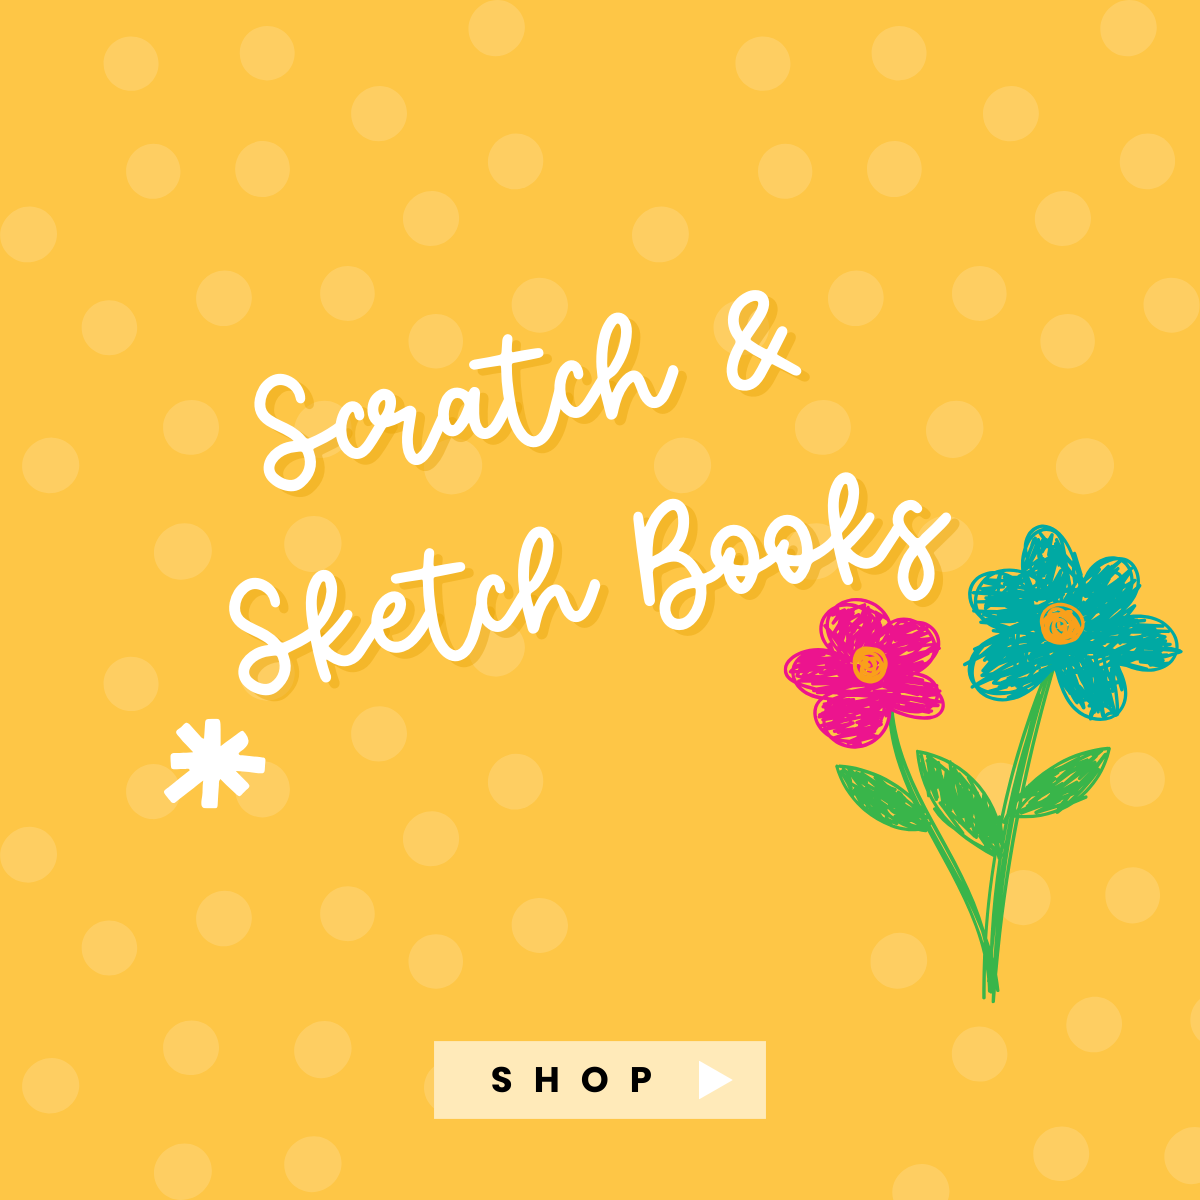 Scratch & Sketch Books for Children